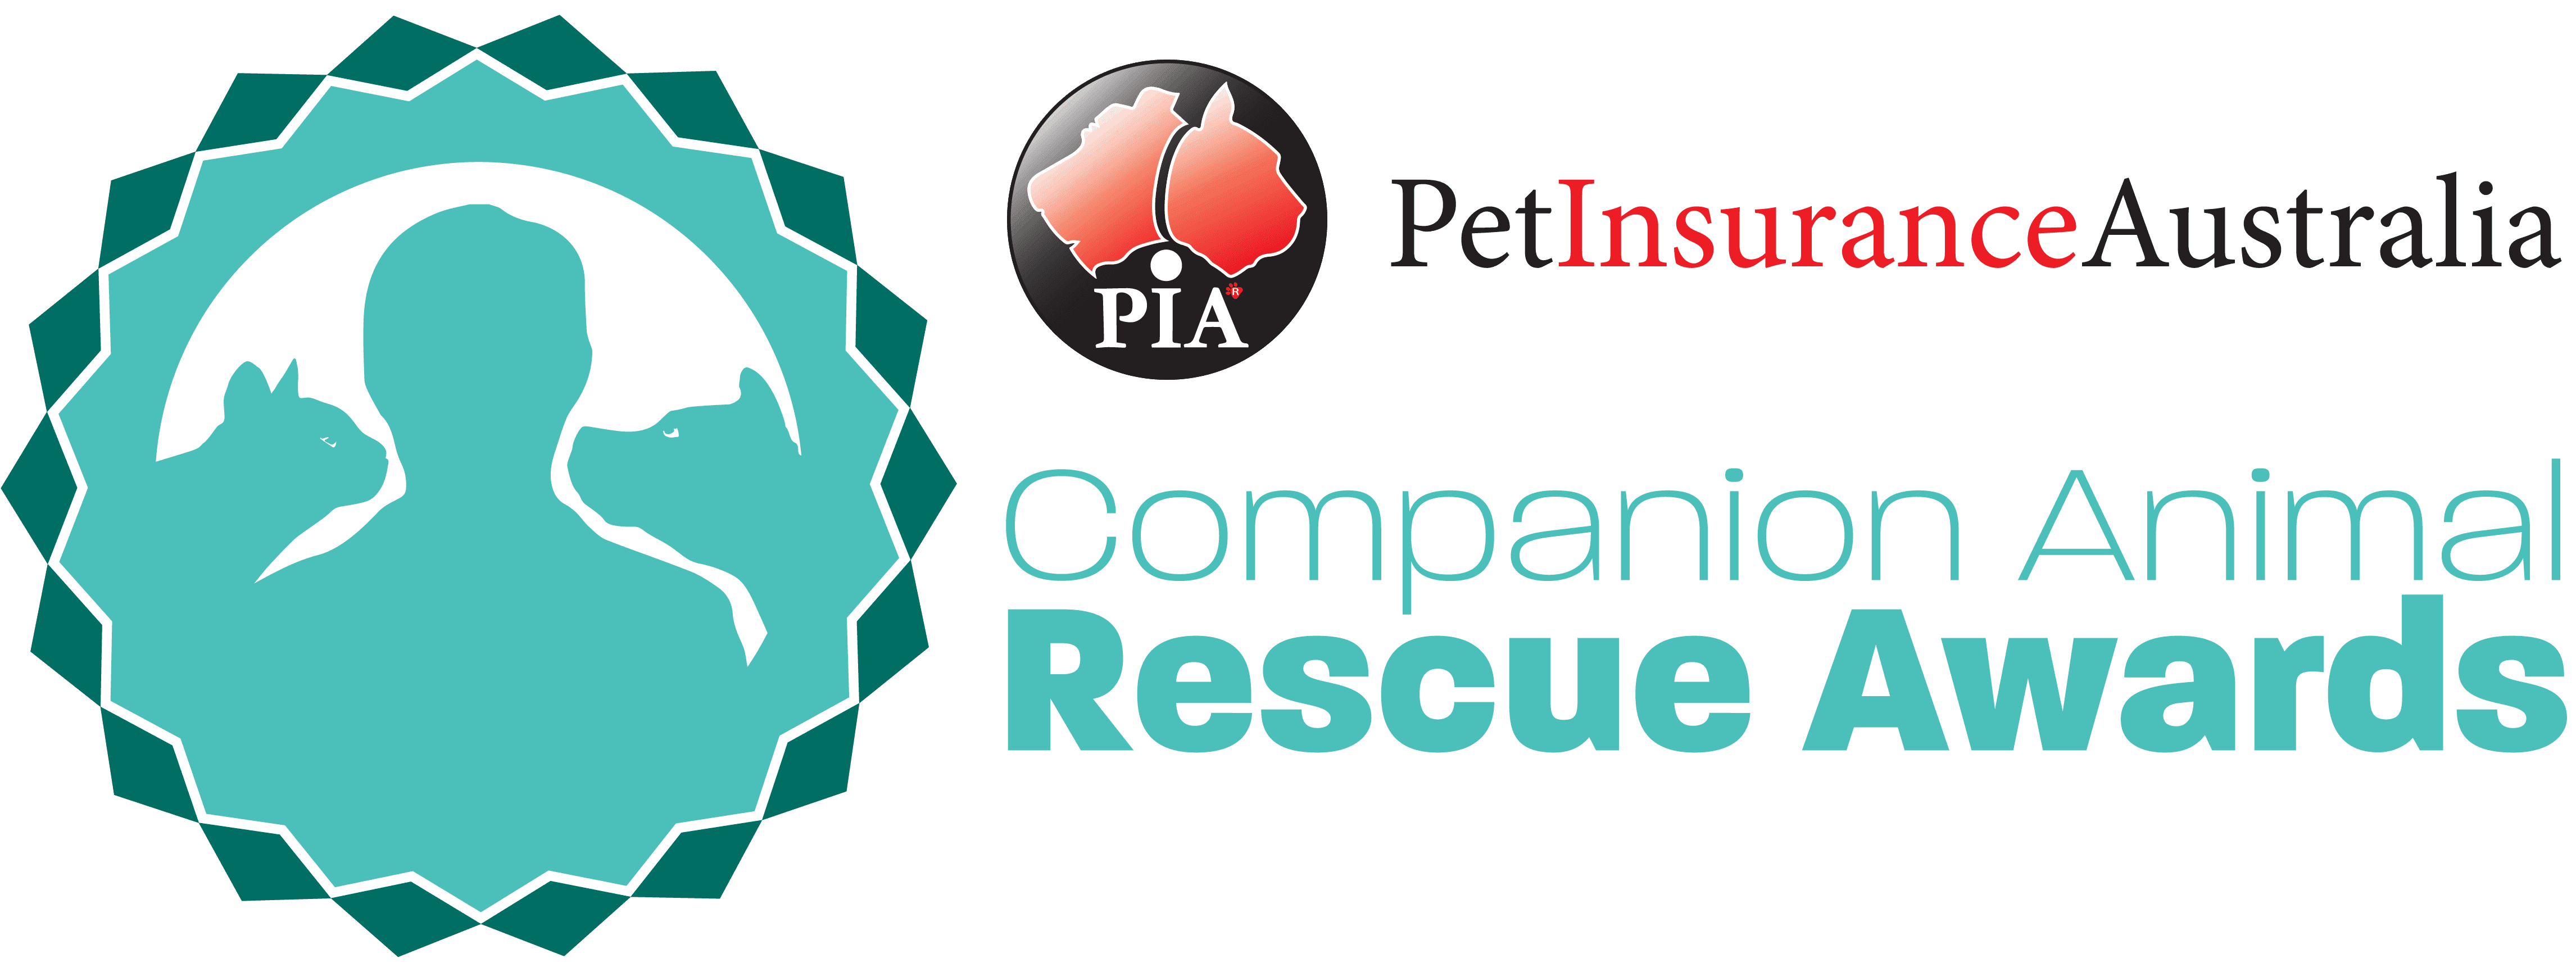 - Insurance Australia Companion Animal Rescue Awards